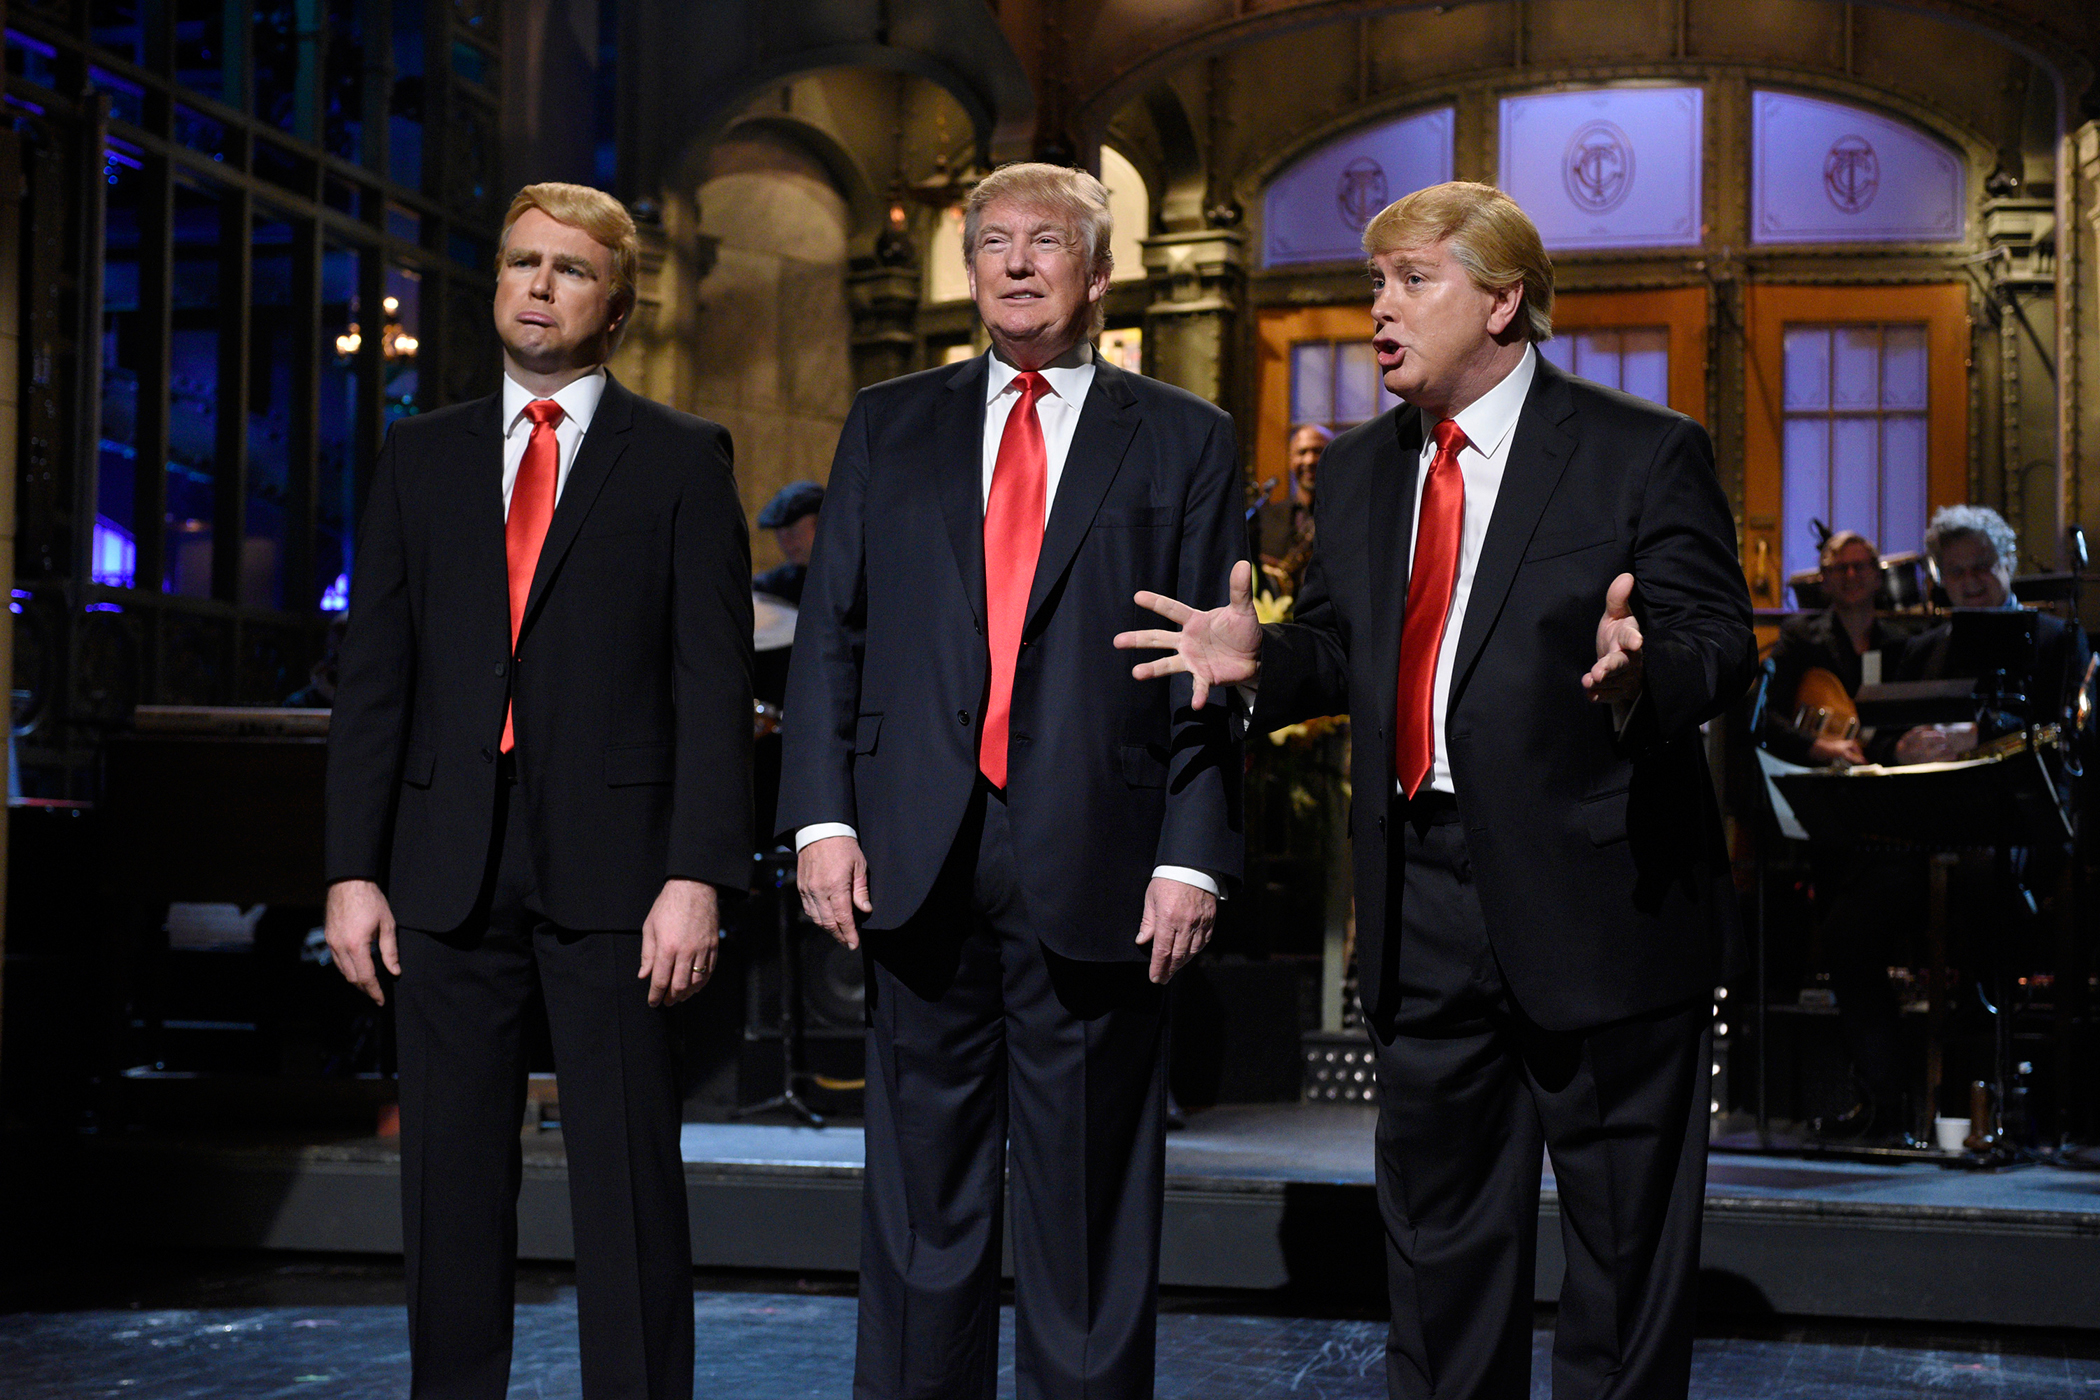 Saturday Night Live "Donald Trump" Episode with (l-r) Taran Killam, Donald Trump, and Darrell Hammond during the monologue on November 7, 2015.